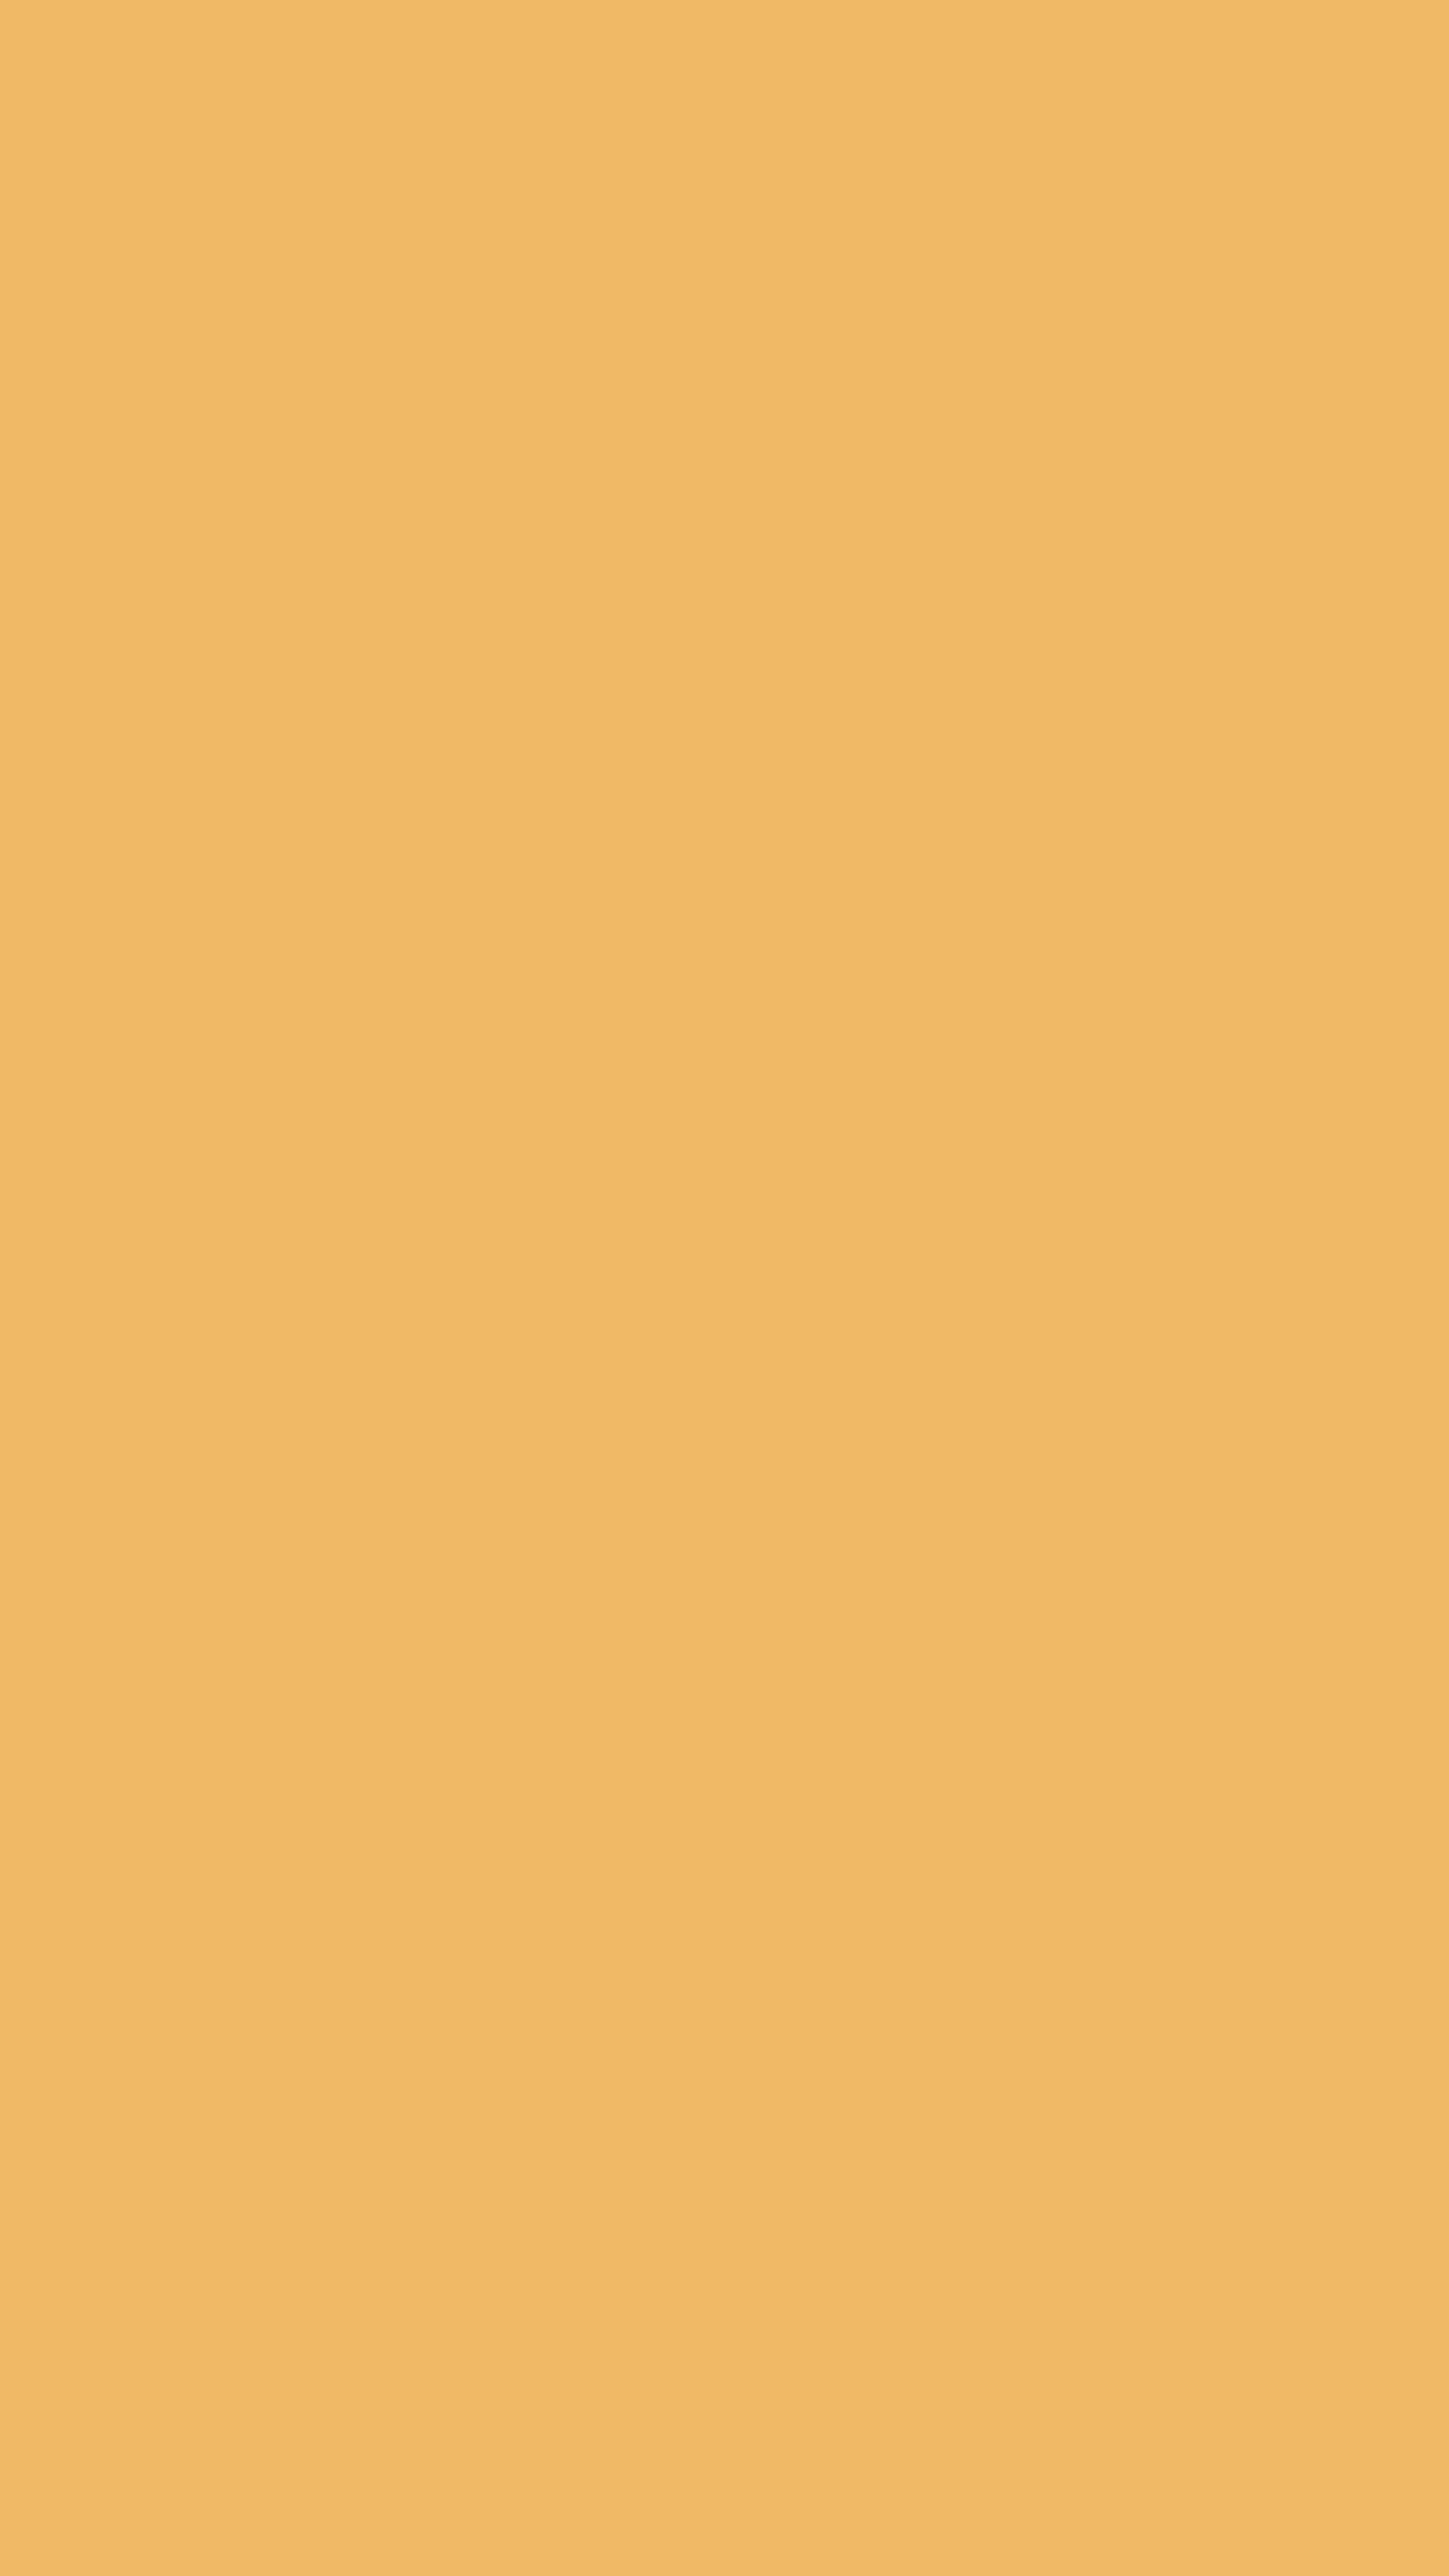 Sunny Orange Color Burst壁紙[a13a489cbca54770aee7]